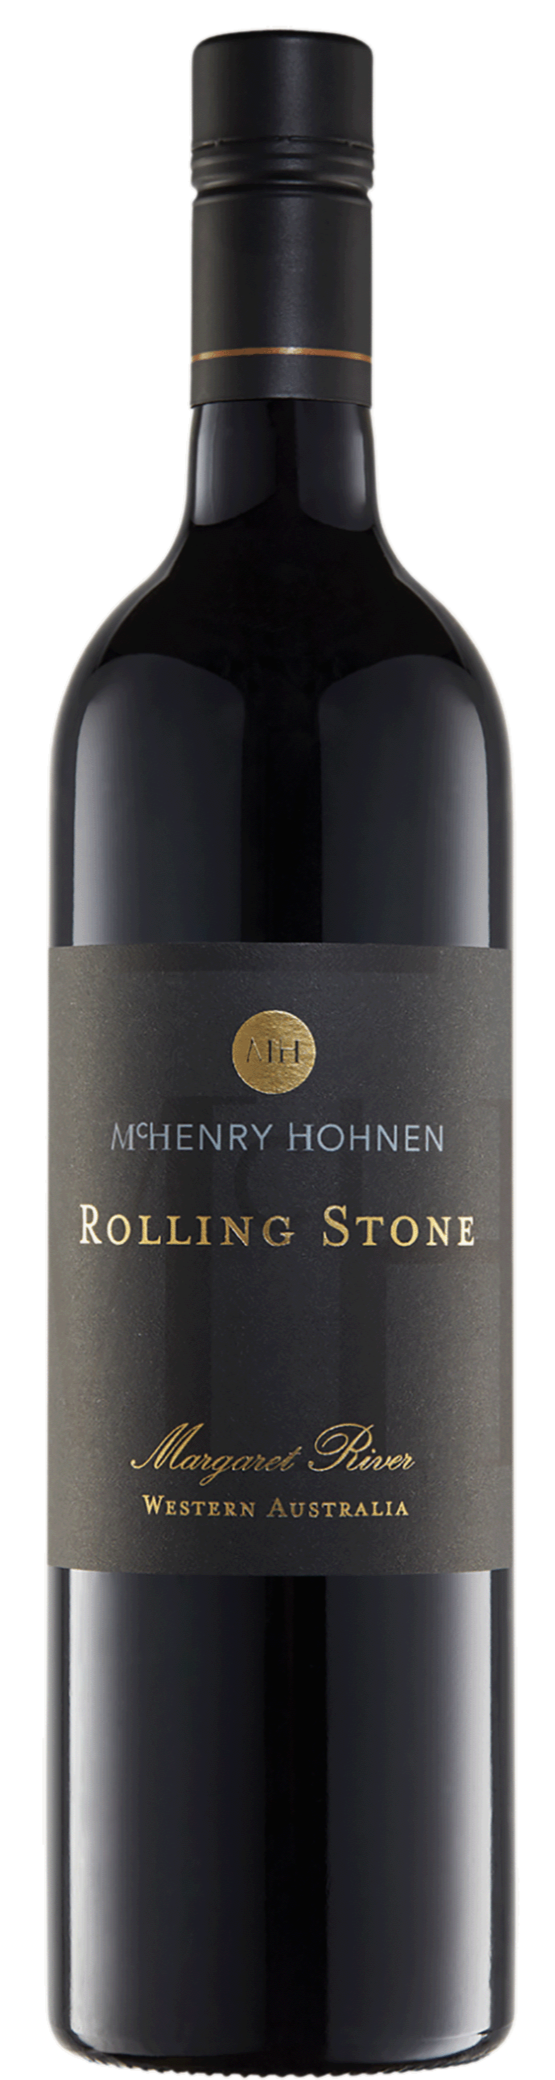 McHenry Hohnen Single Vineyard Rolling Stone 2016